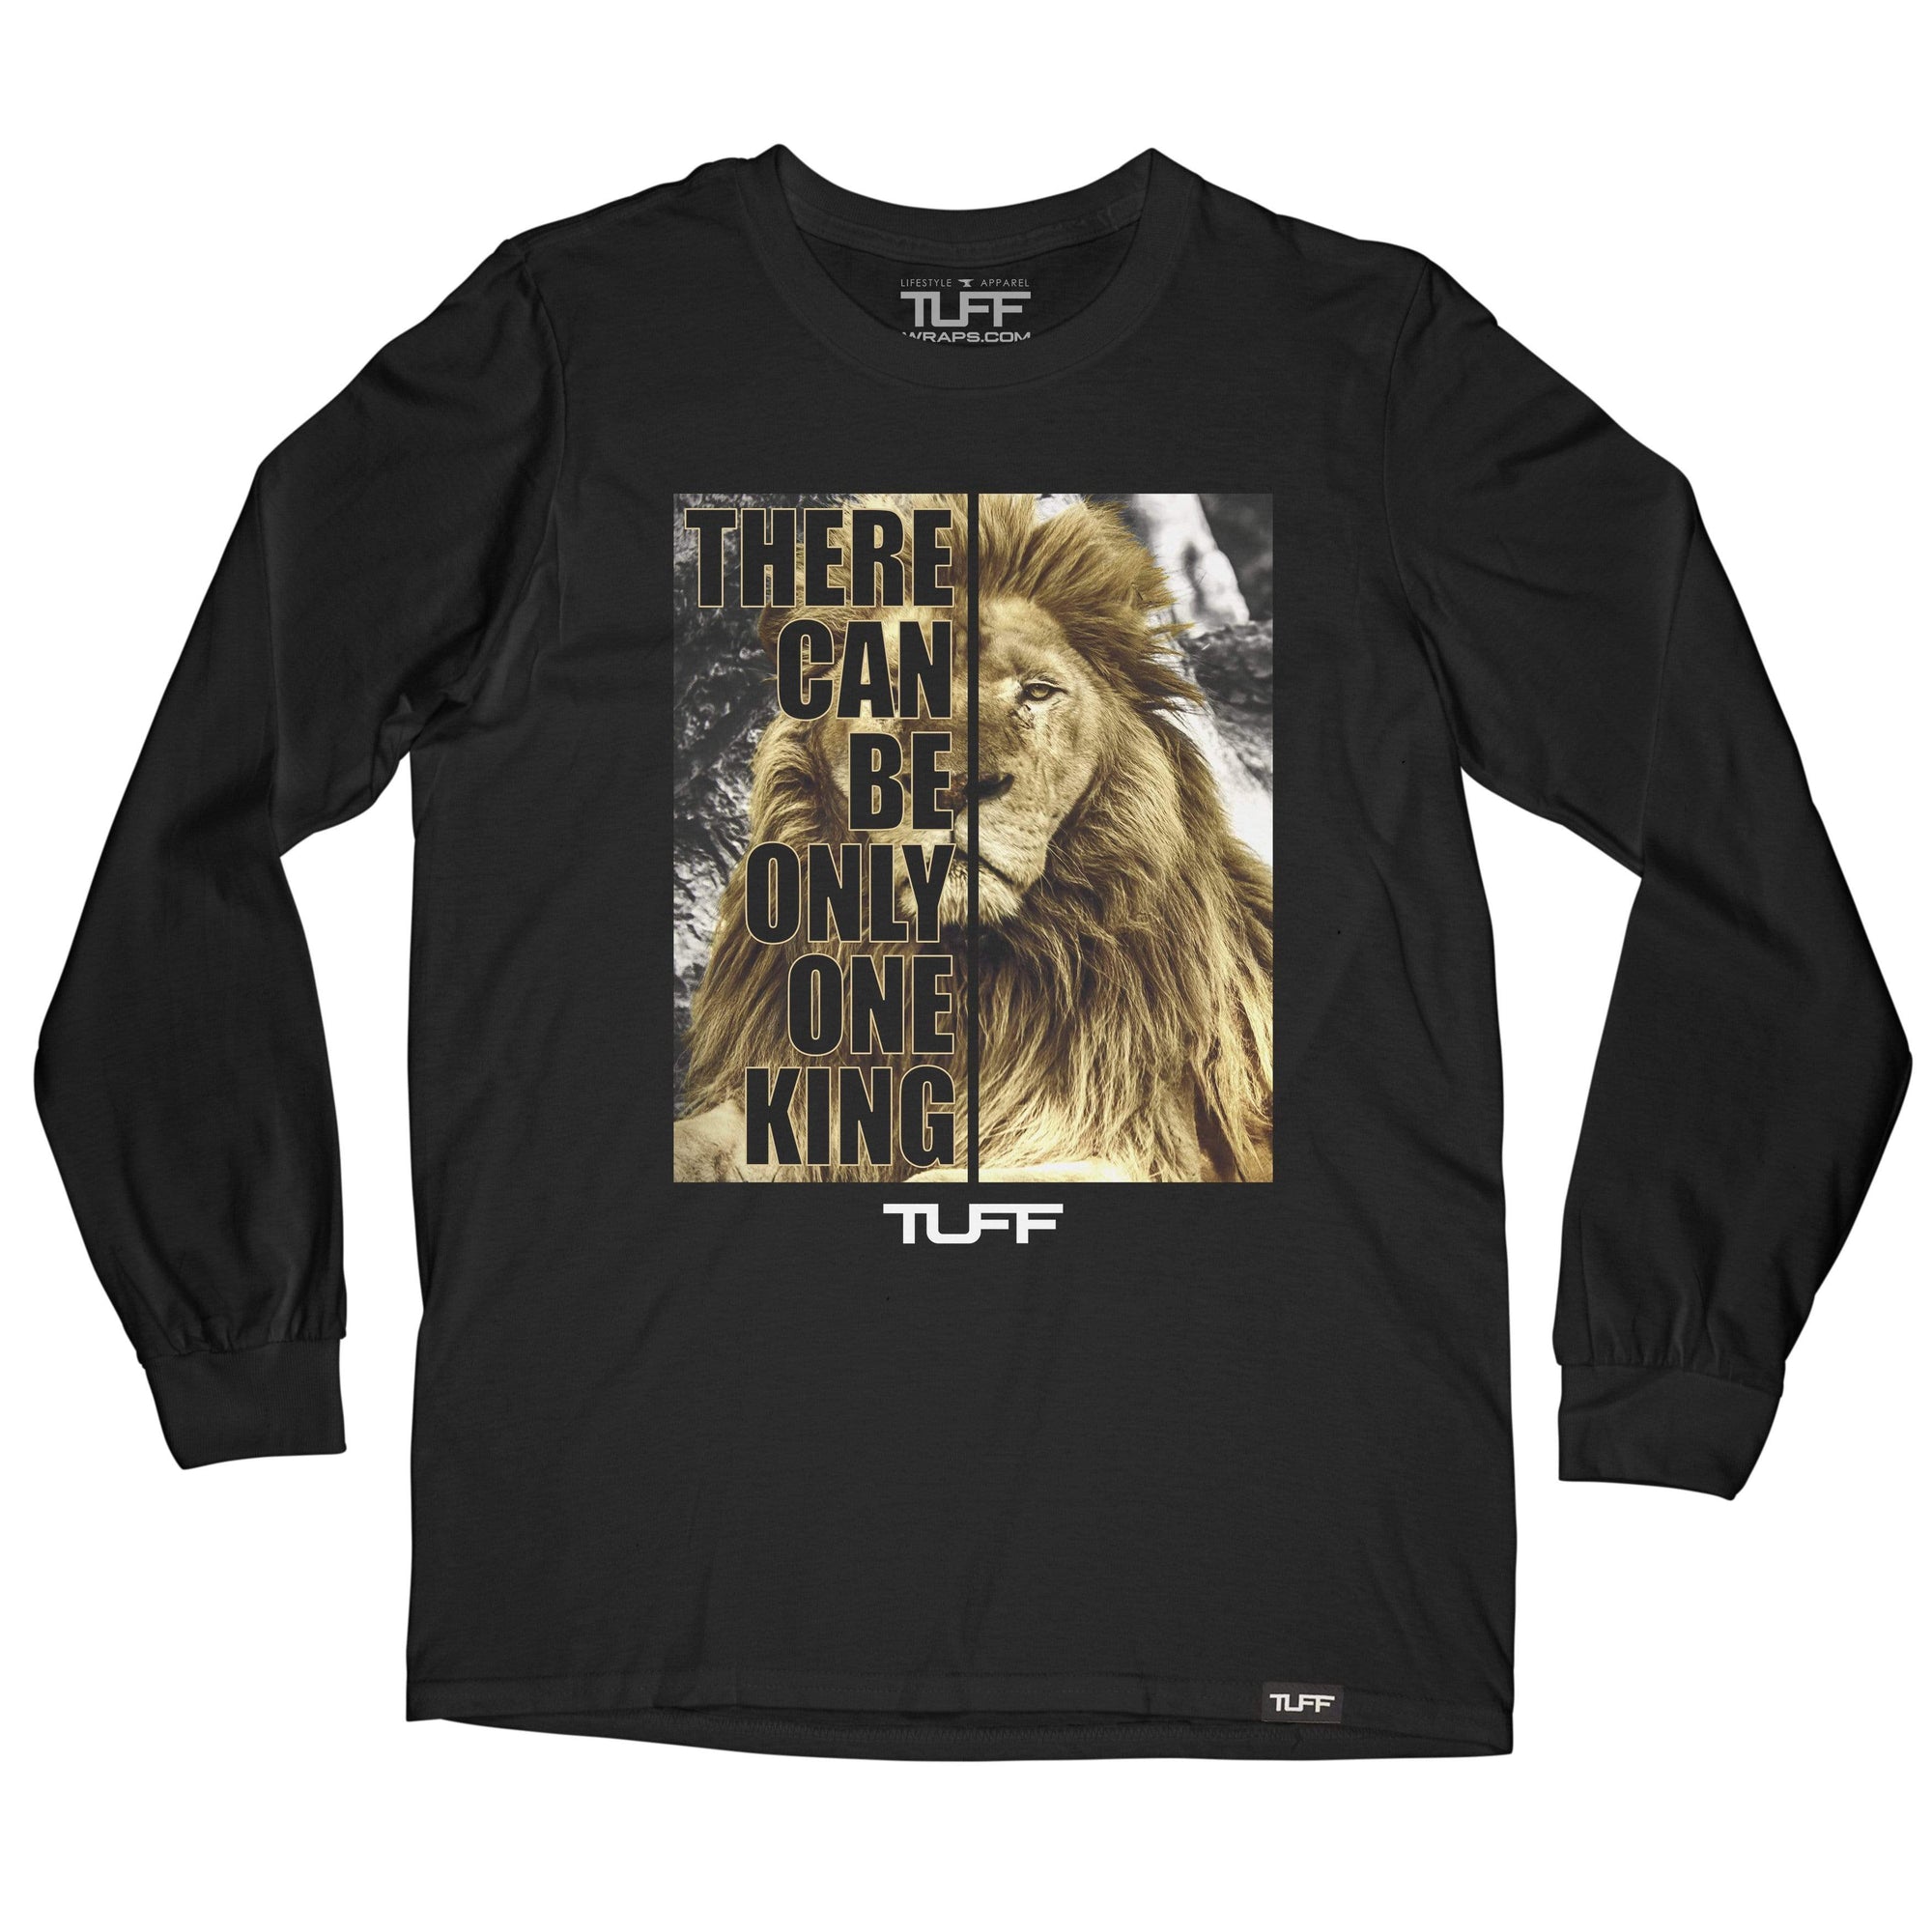 The Lion King Long Sleeve Tee S / Black TuffWraps.com